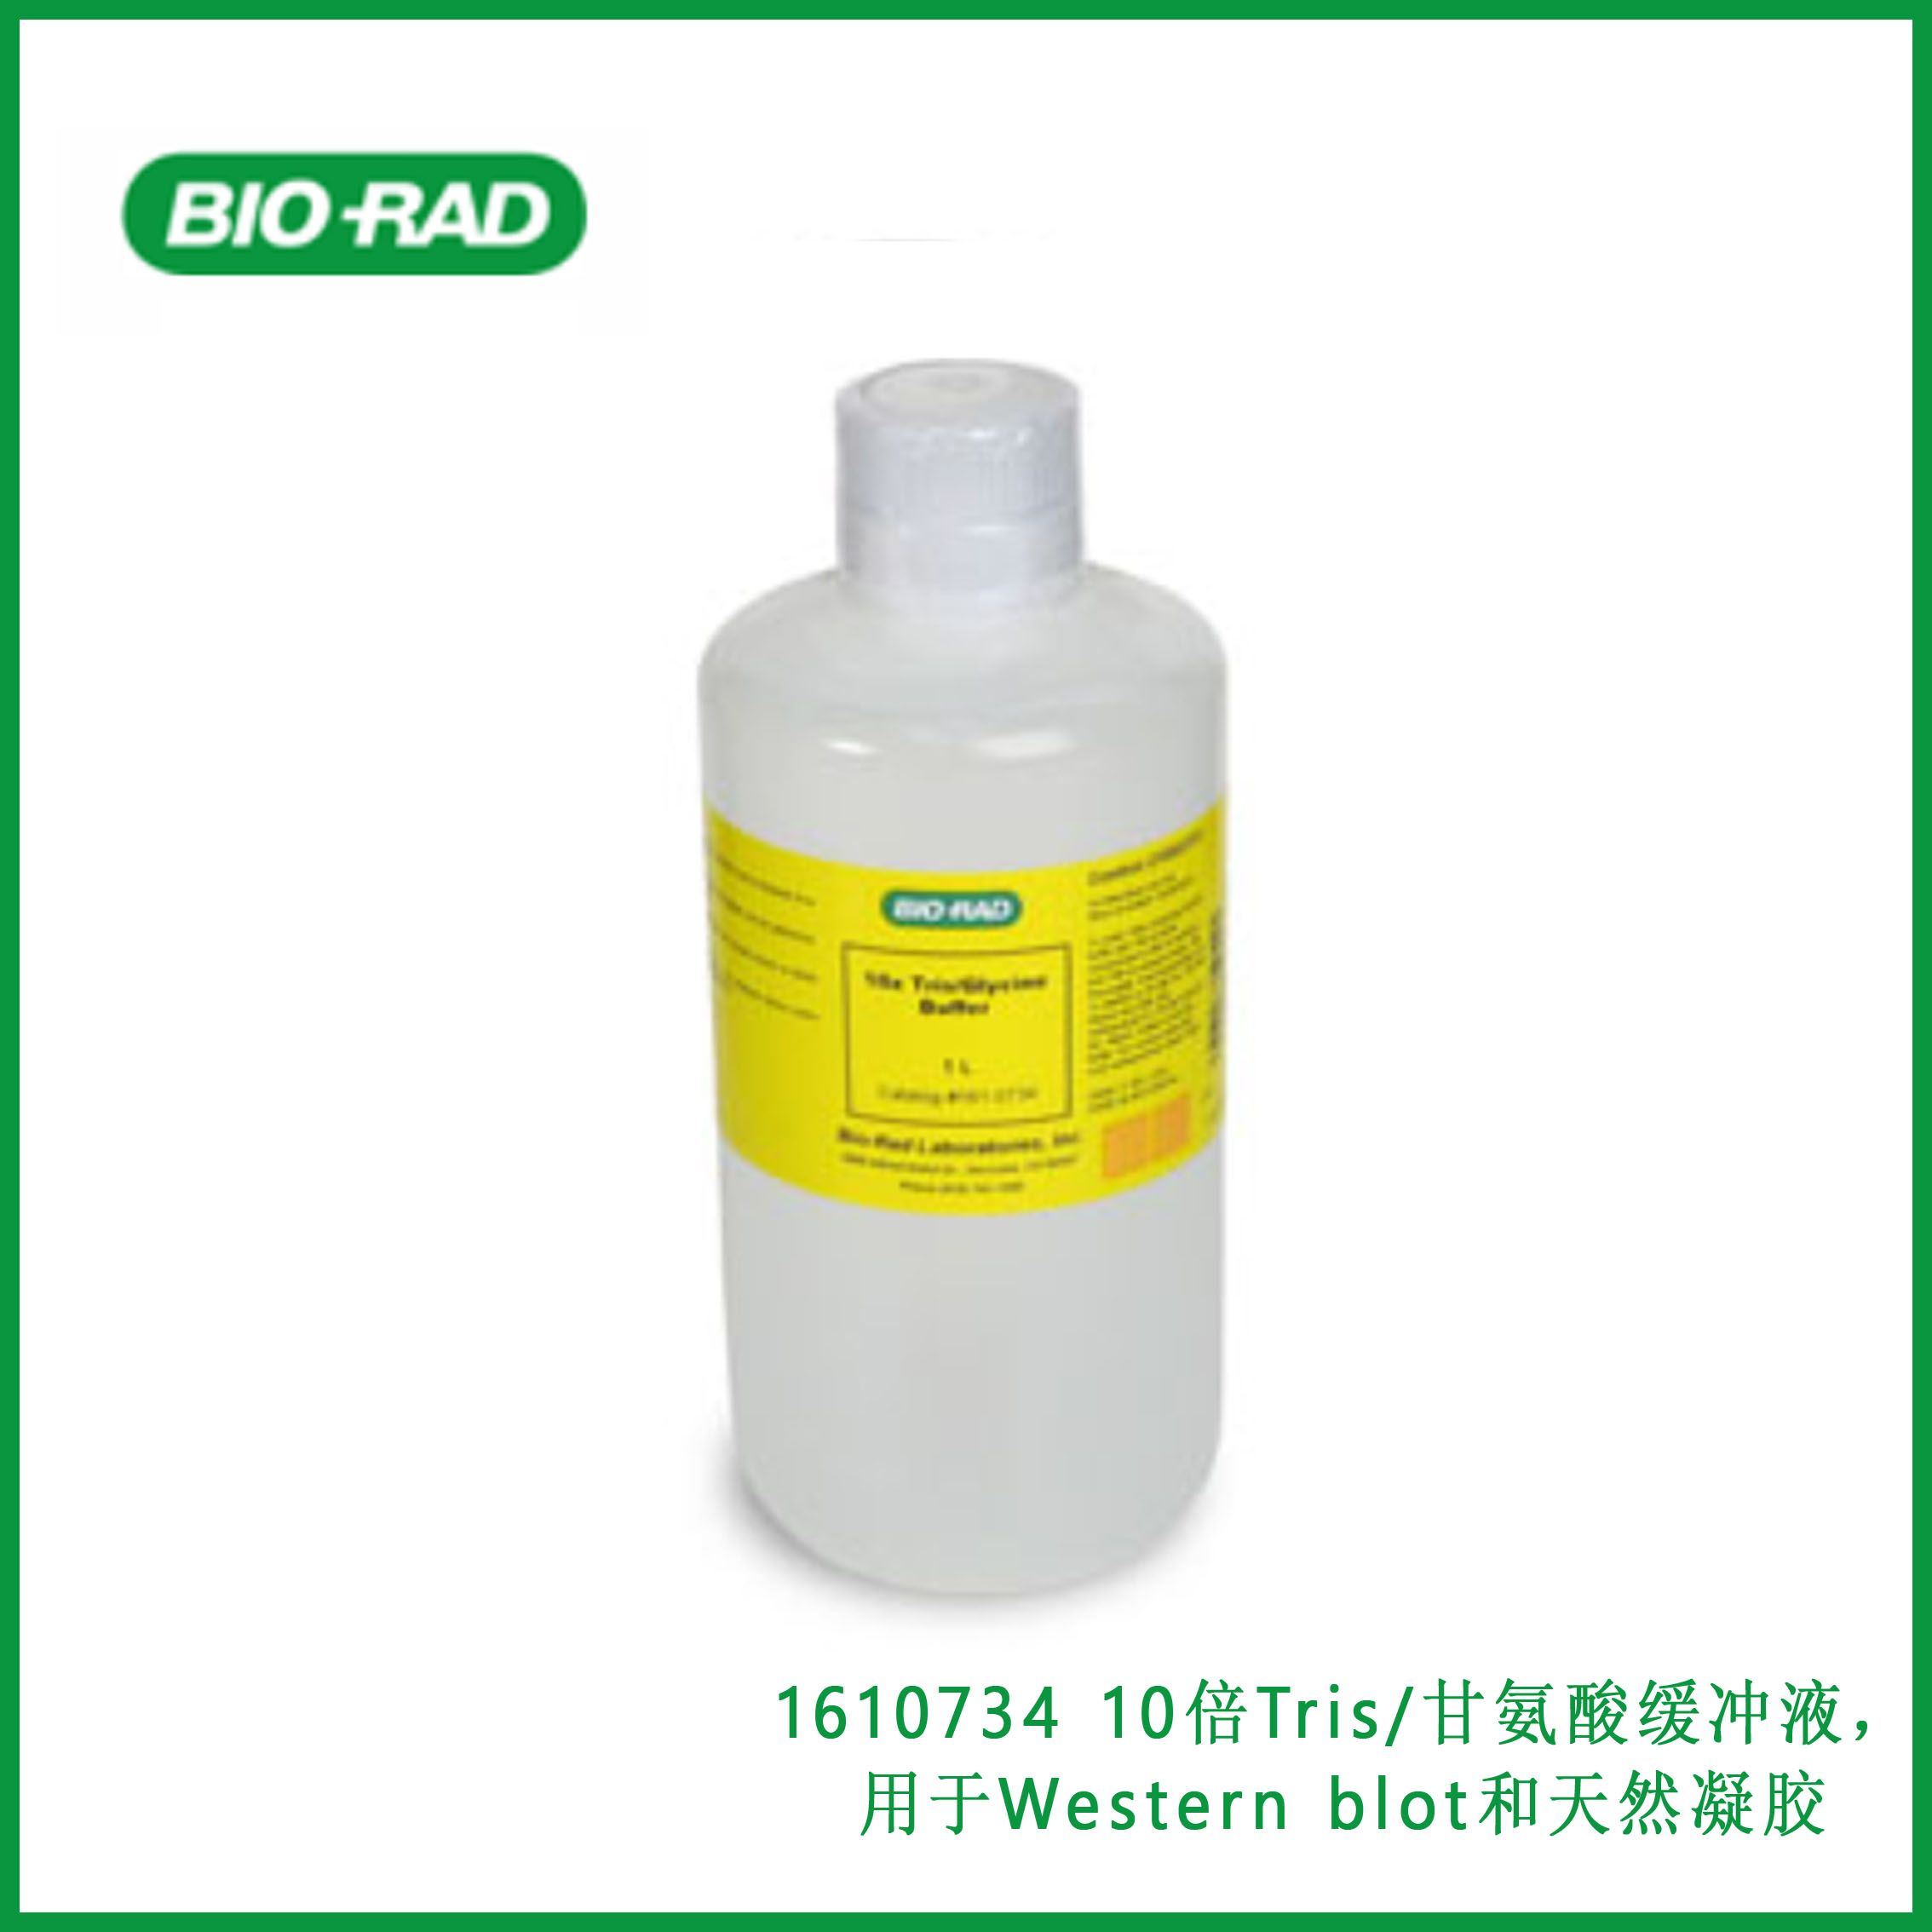 伯乐Bio-Rad1610734 10x Tris/Glycine Buffer for Western Blots and Native Gels，10倍Tris/甘氨酸缓冲液，用于Western blot和天然凝胶,现货